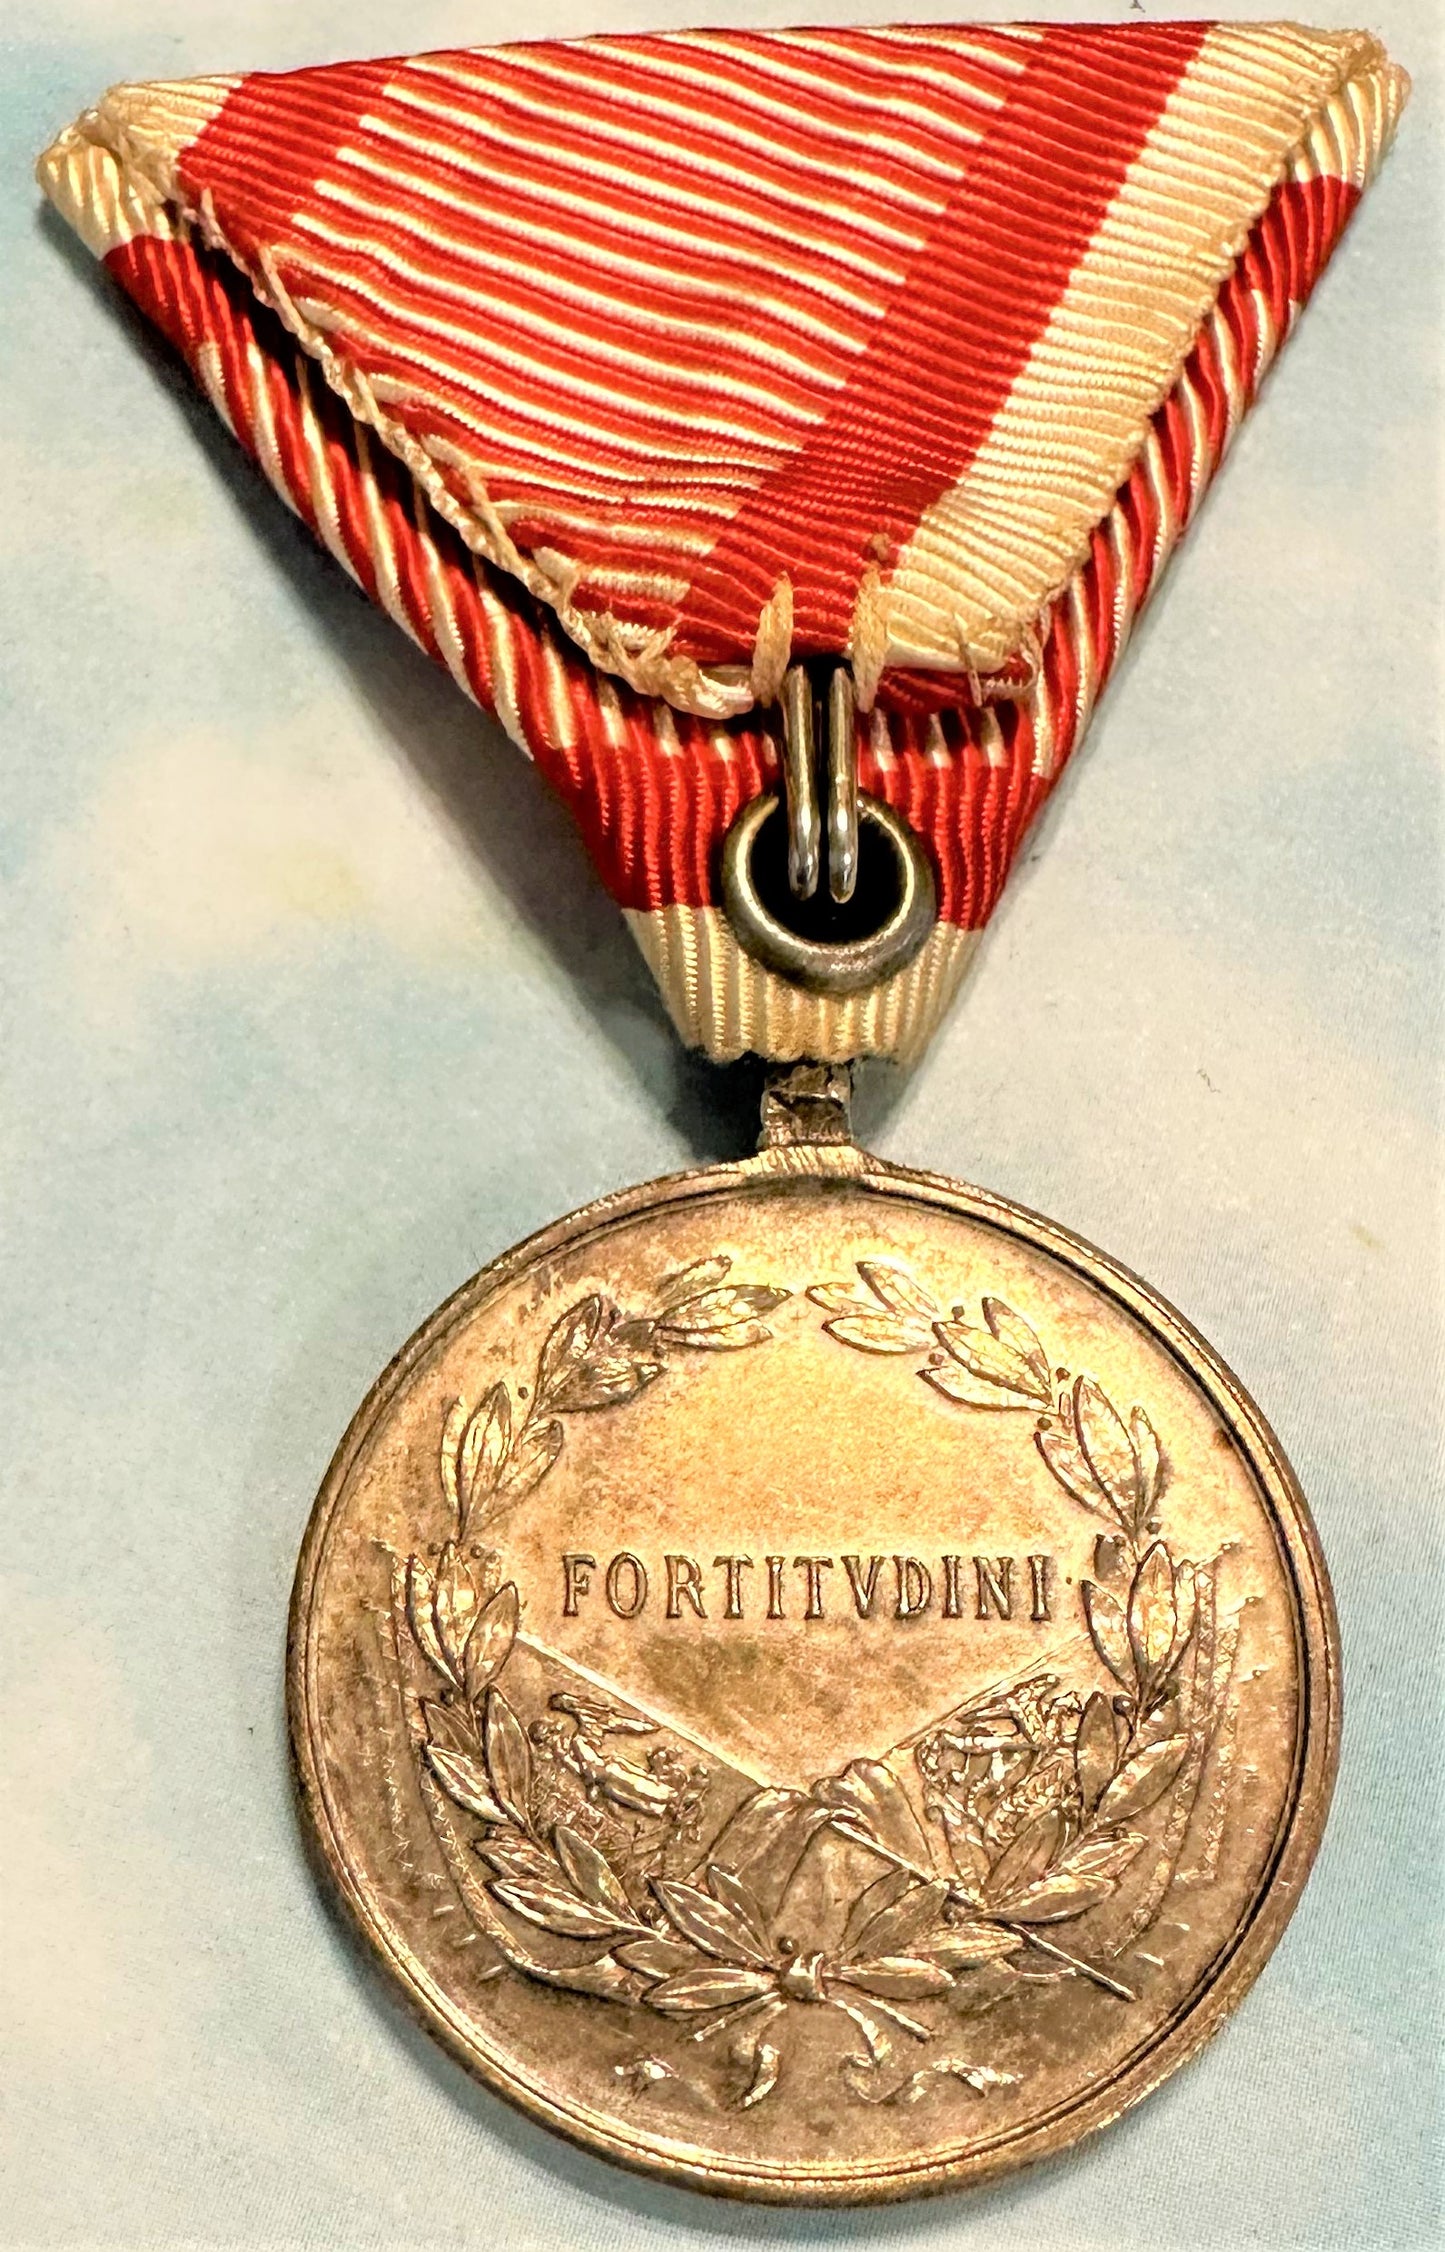 Austria - Kaiser Karl Silver Service Medal - An Emblem of Distinguished Service - Derrittmeister Militaria Group